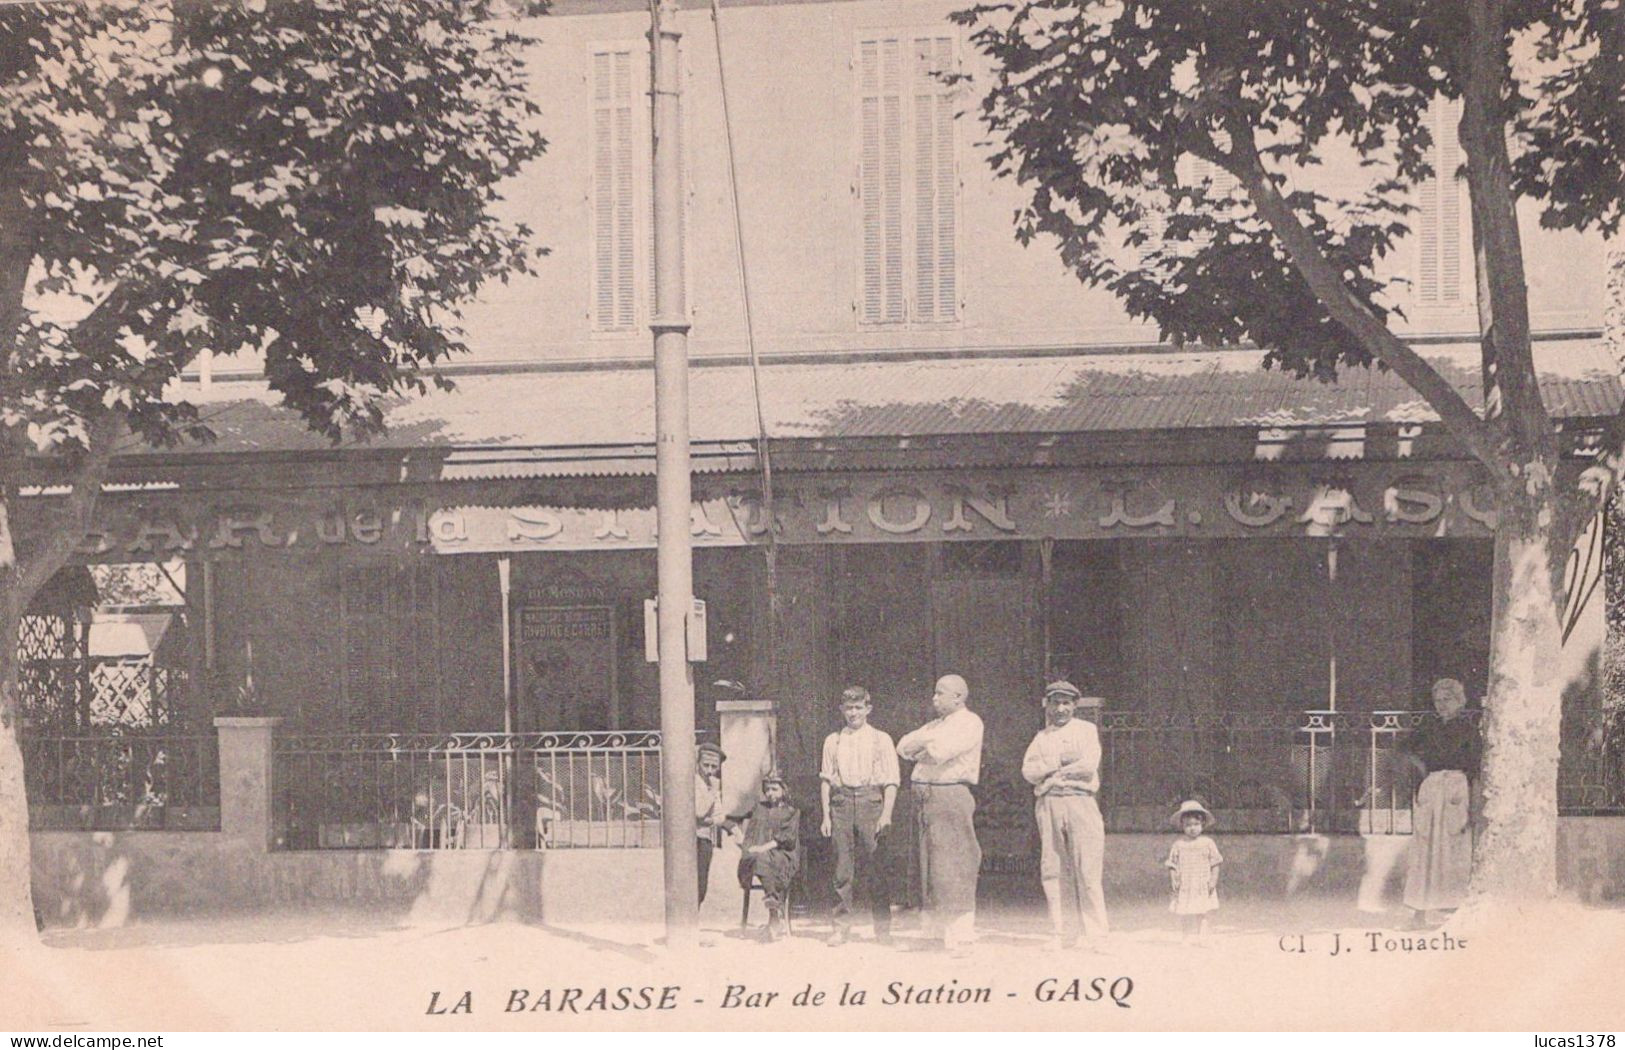 13 / MARSEILLE / LA BARASSE / BAR DE LA STATION / GASQ - Saint Marcel, La Barasse, Saintt Menet